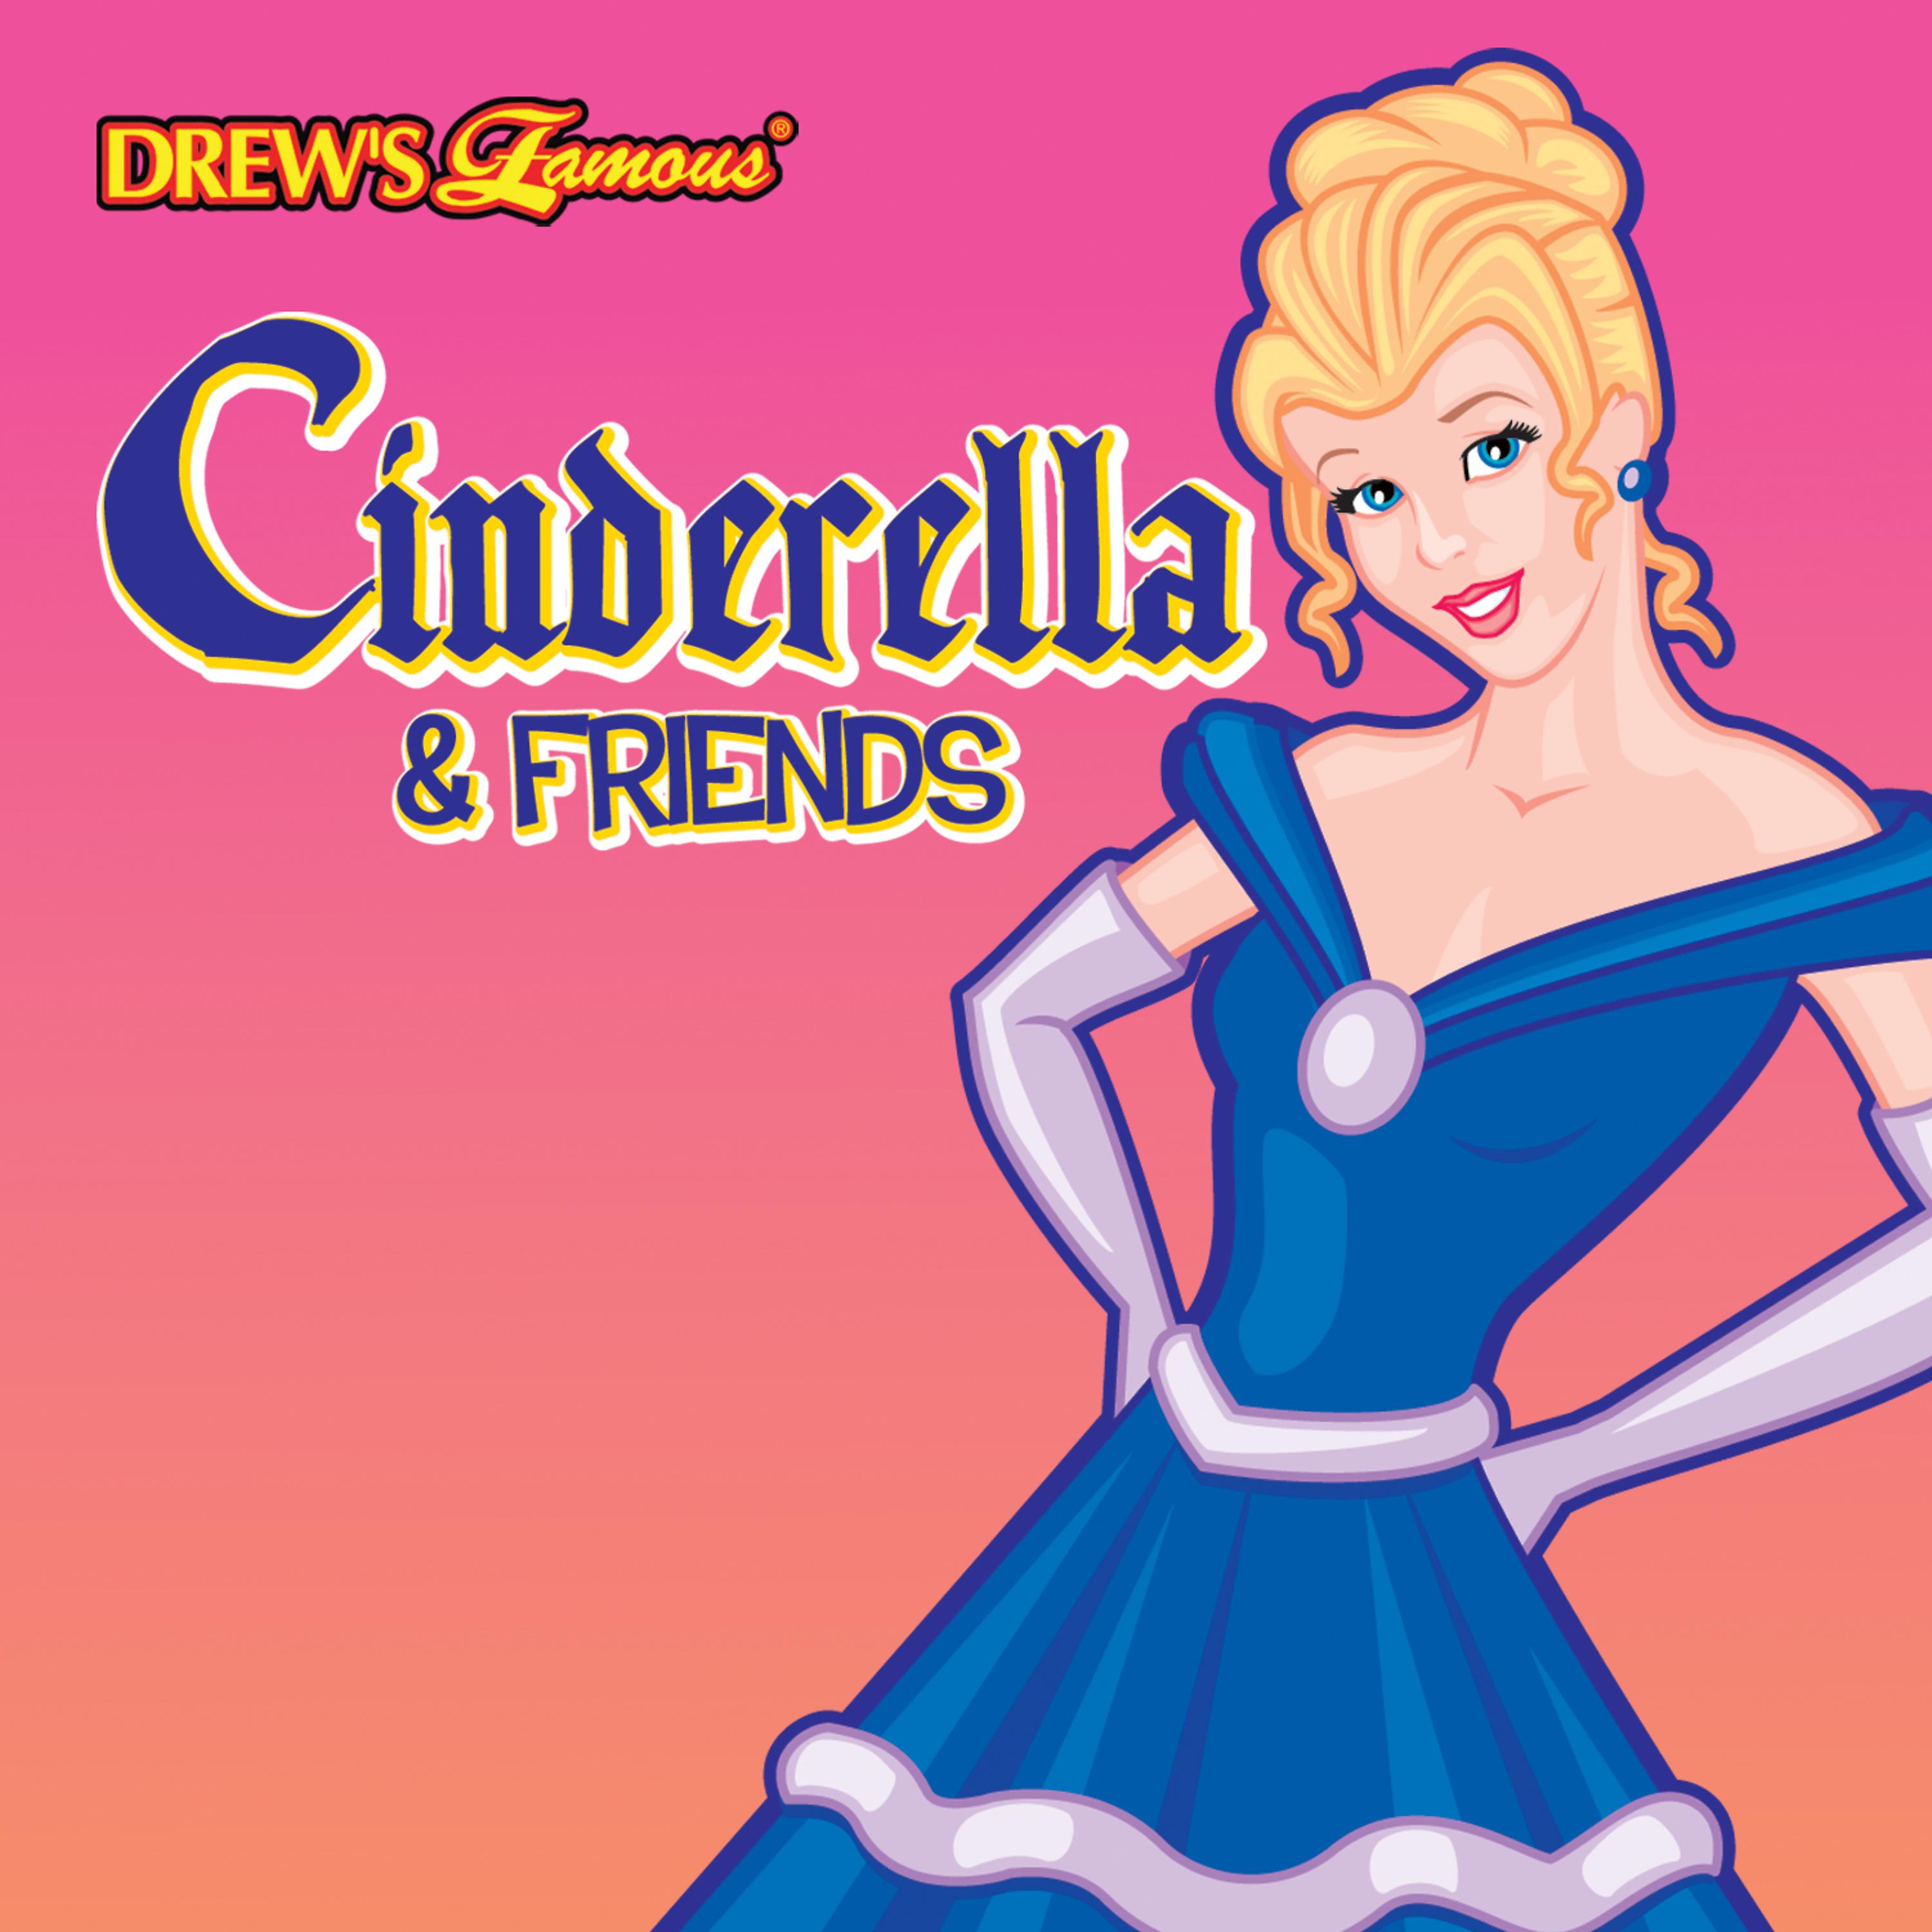 Cinderella песни. Золушка песни. Золушка и певец. Cinderella альбомы. Cinderella's friends.